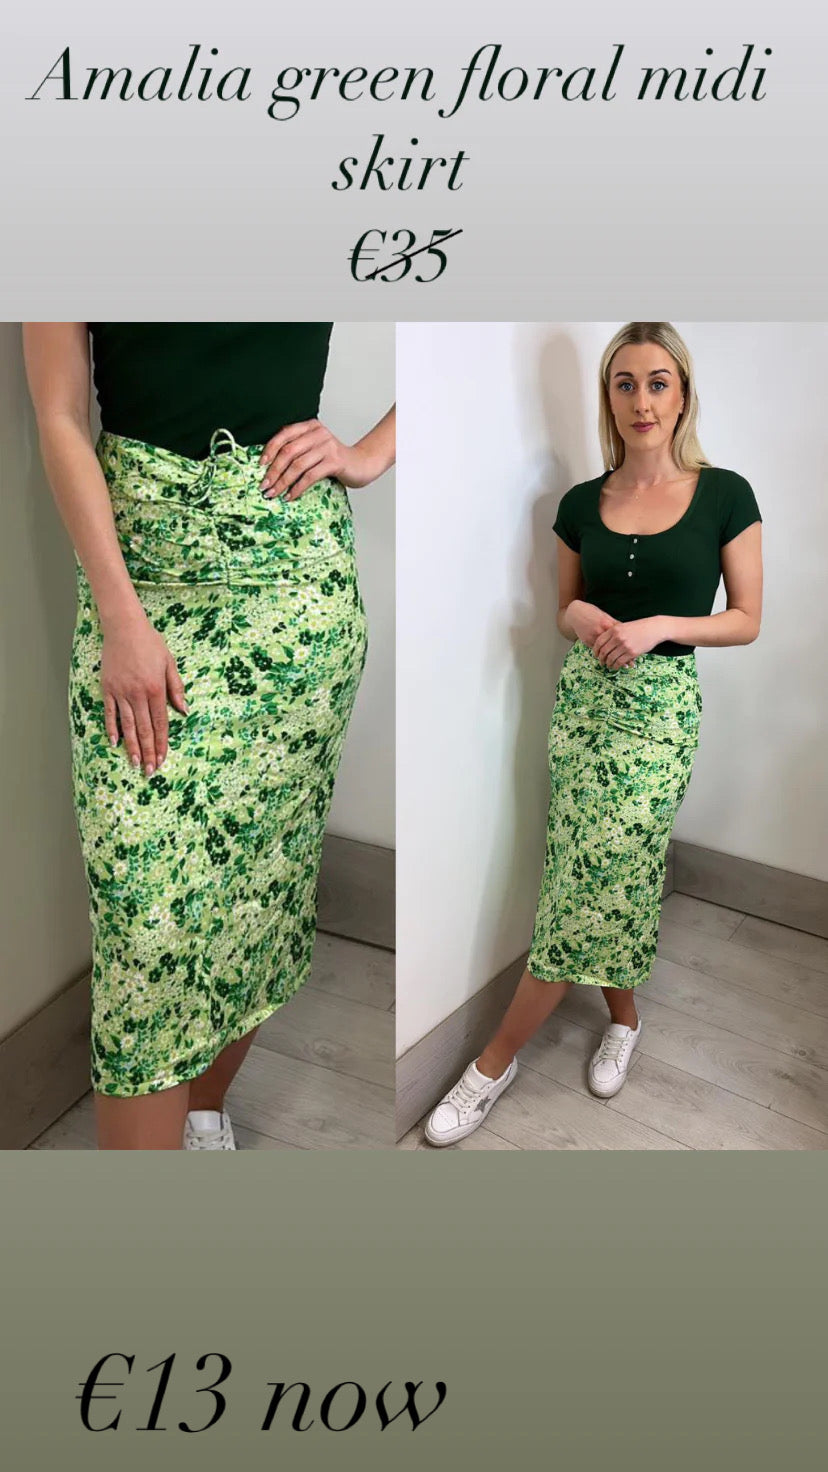 Amalia green floral midi skirt